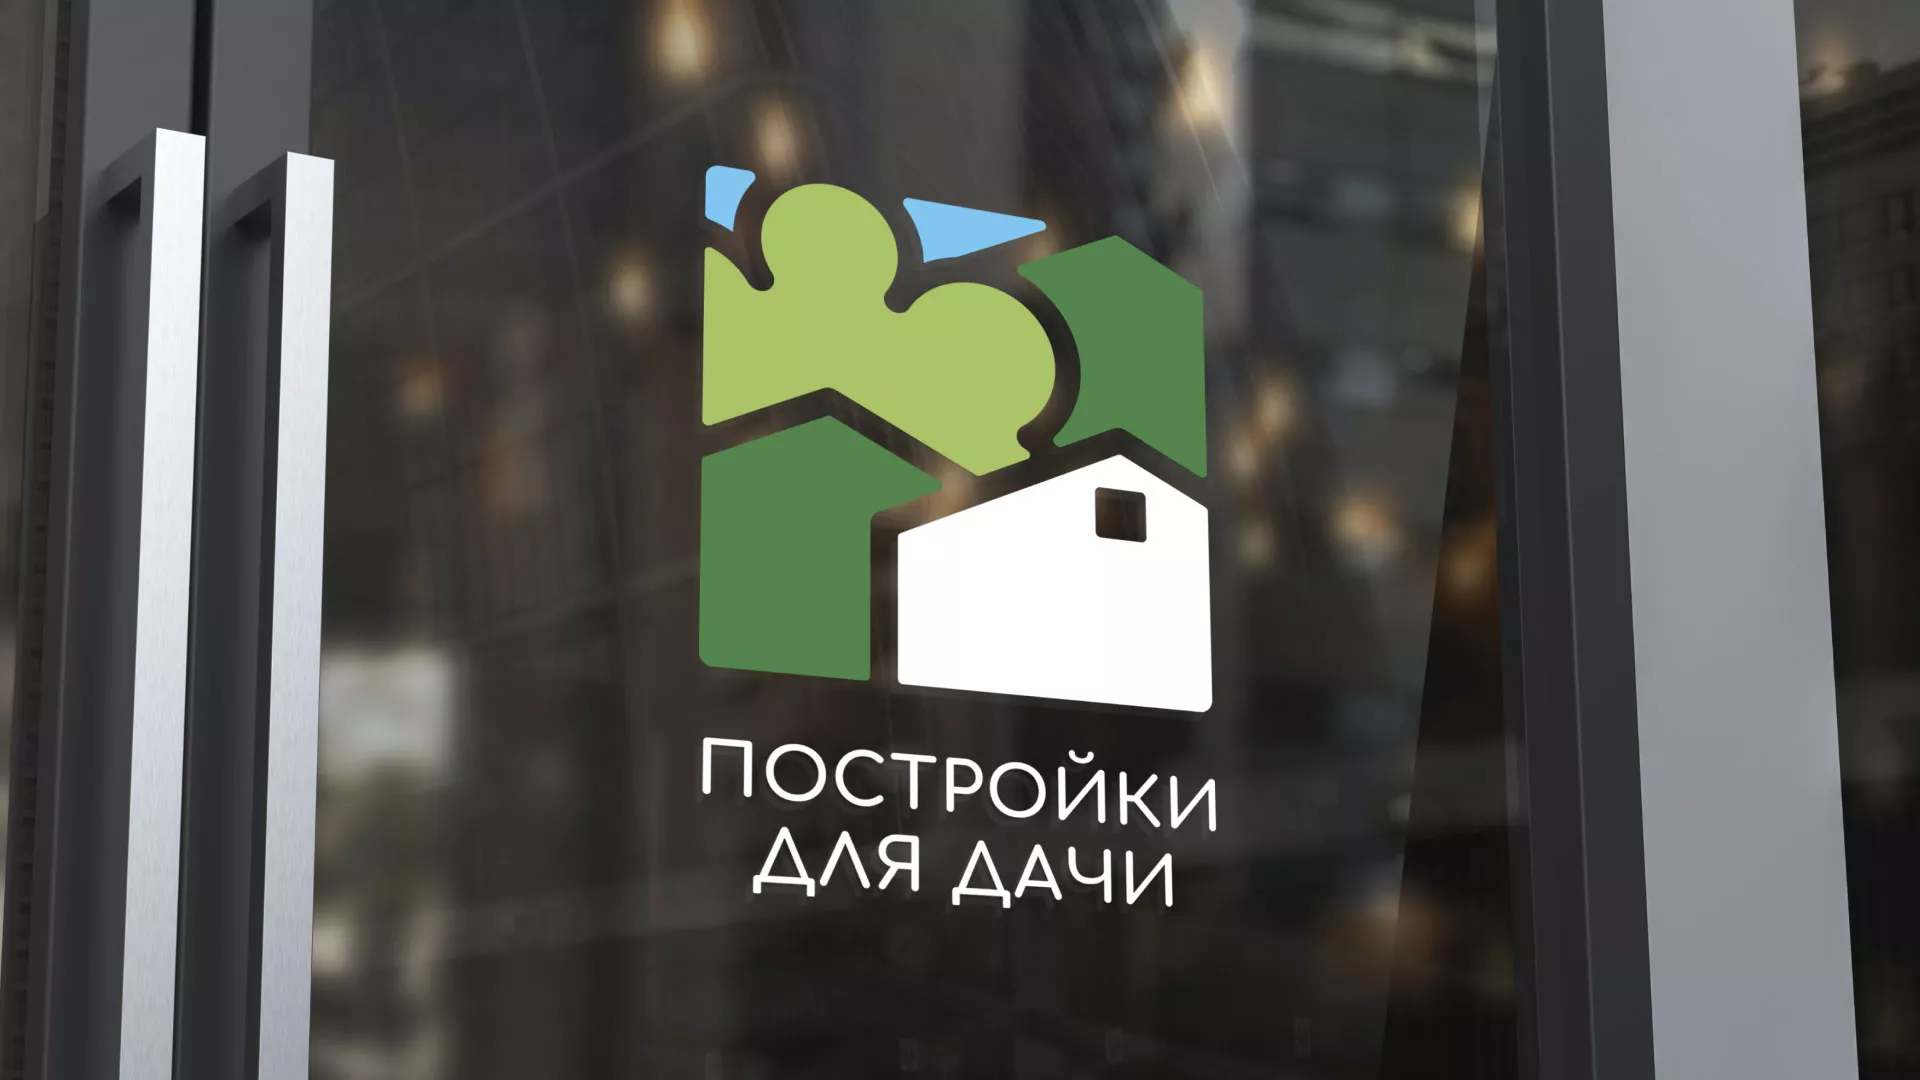 Разработка логотипа в Александровске-Сахалинском для компании «Постройки для дачи»